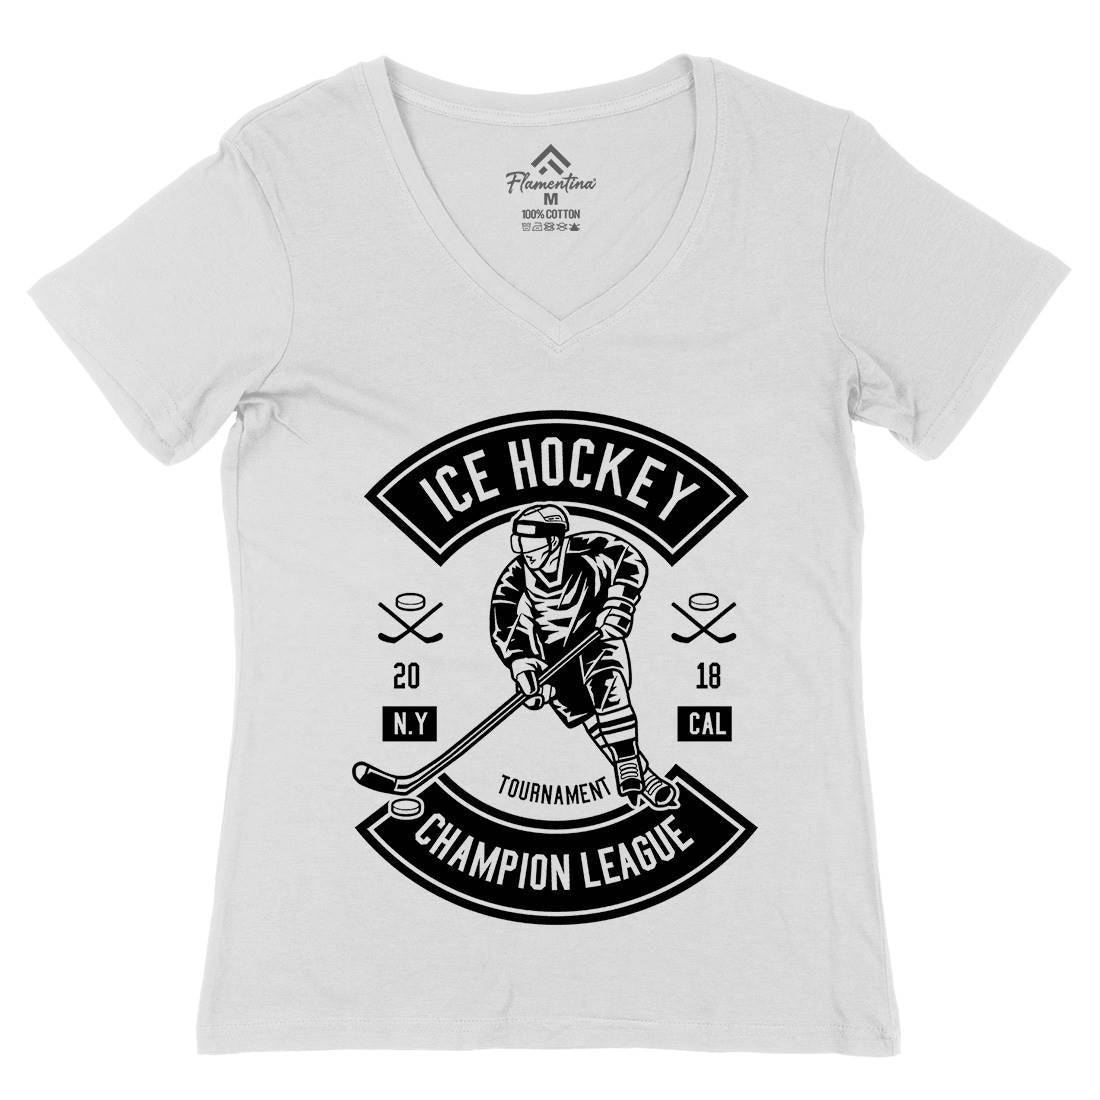 Ice Hockey Champion League Womens Organic V-Neck T-Shirt Sport B564